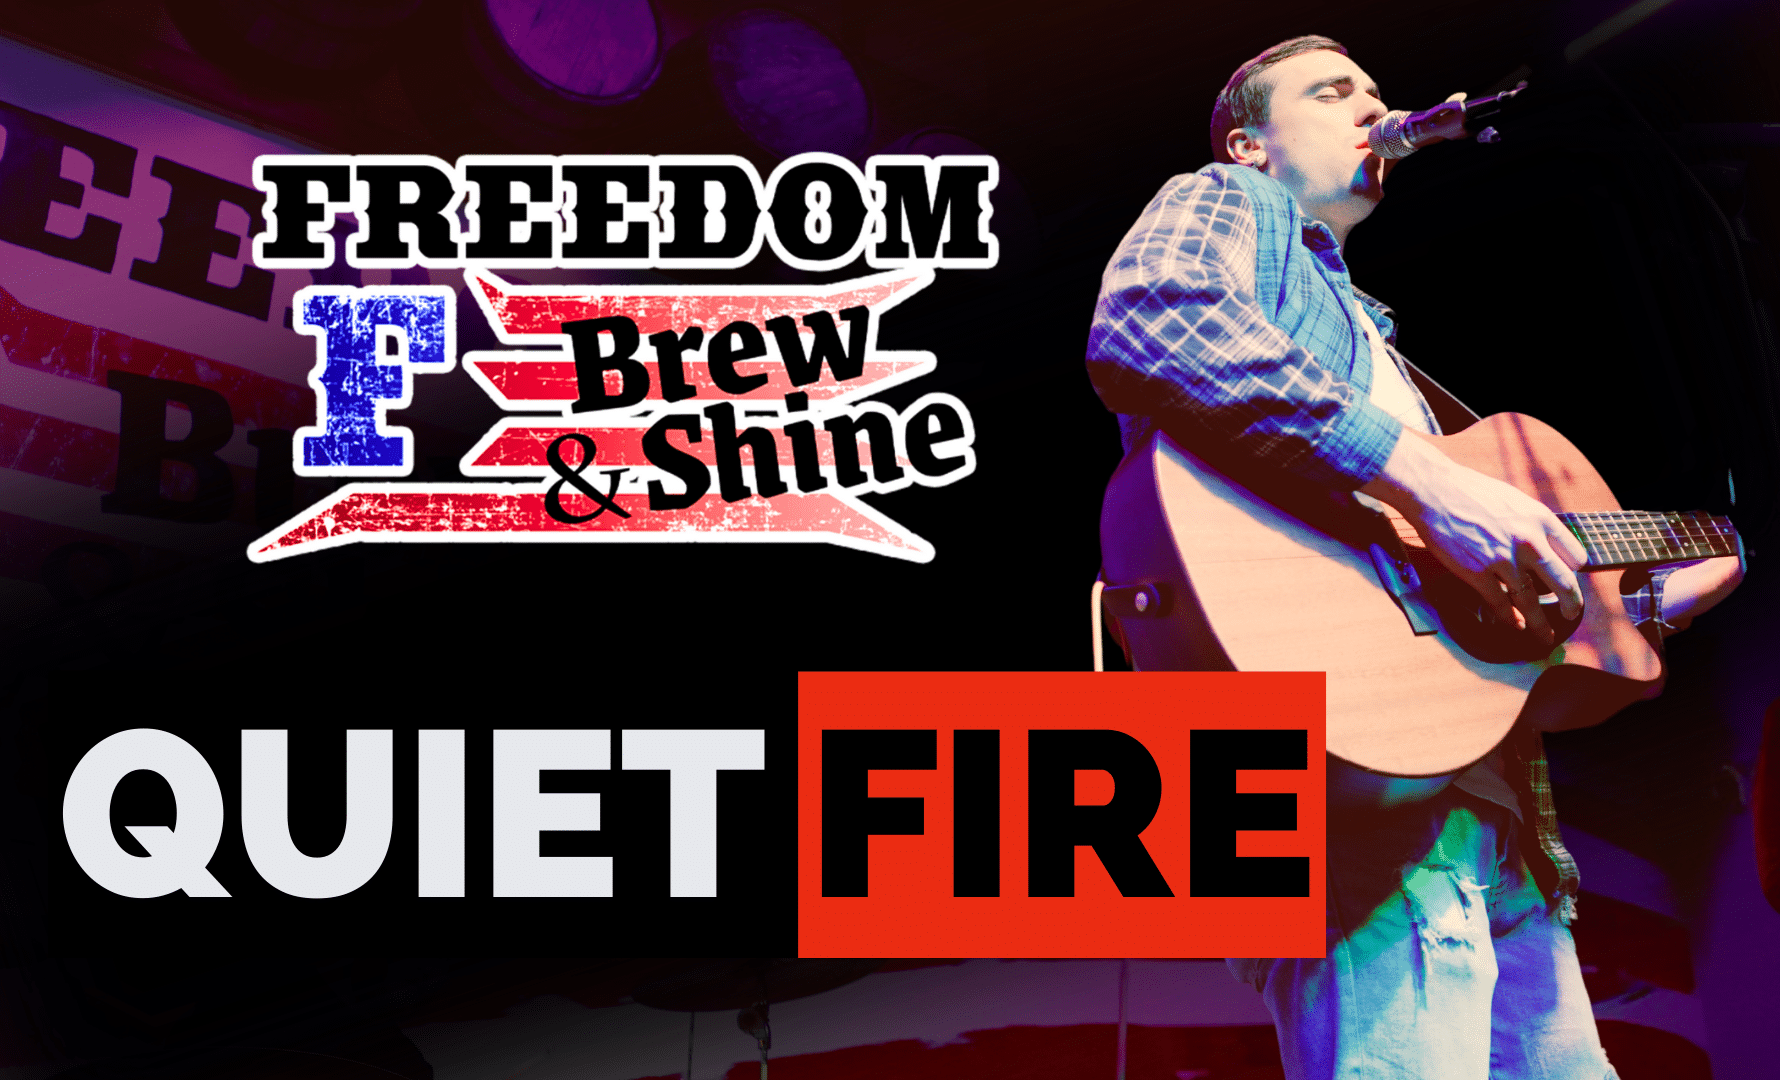 Quiet Fire @ Freedom Brew & Shine